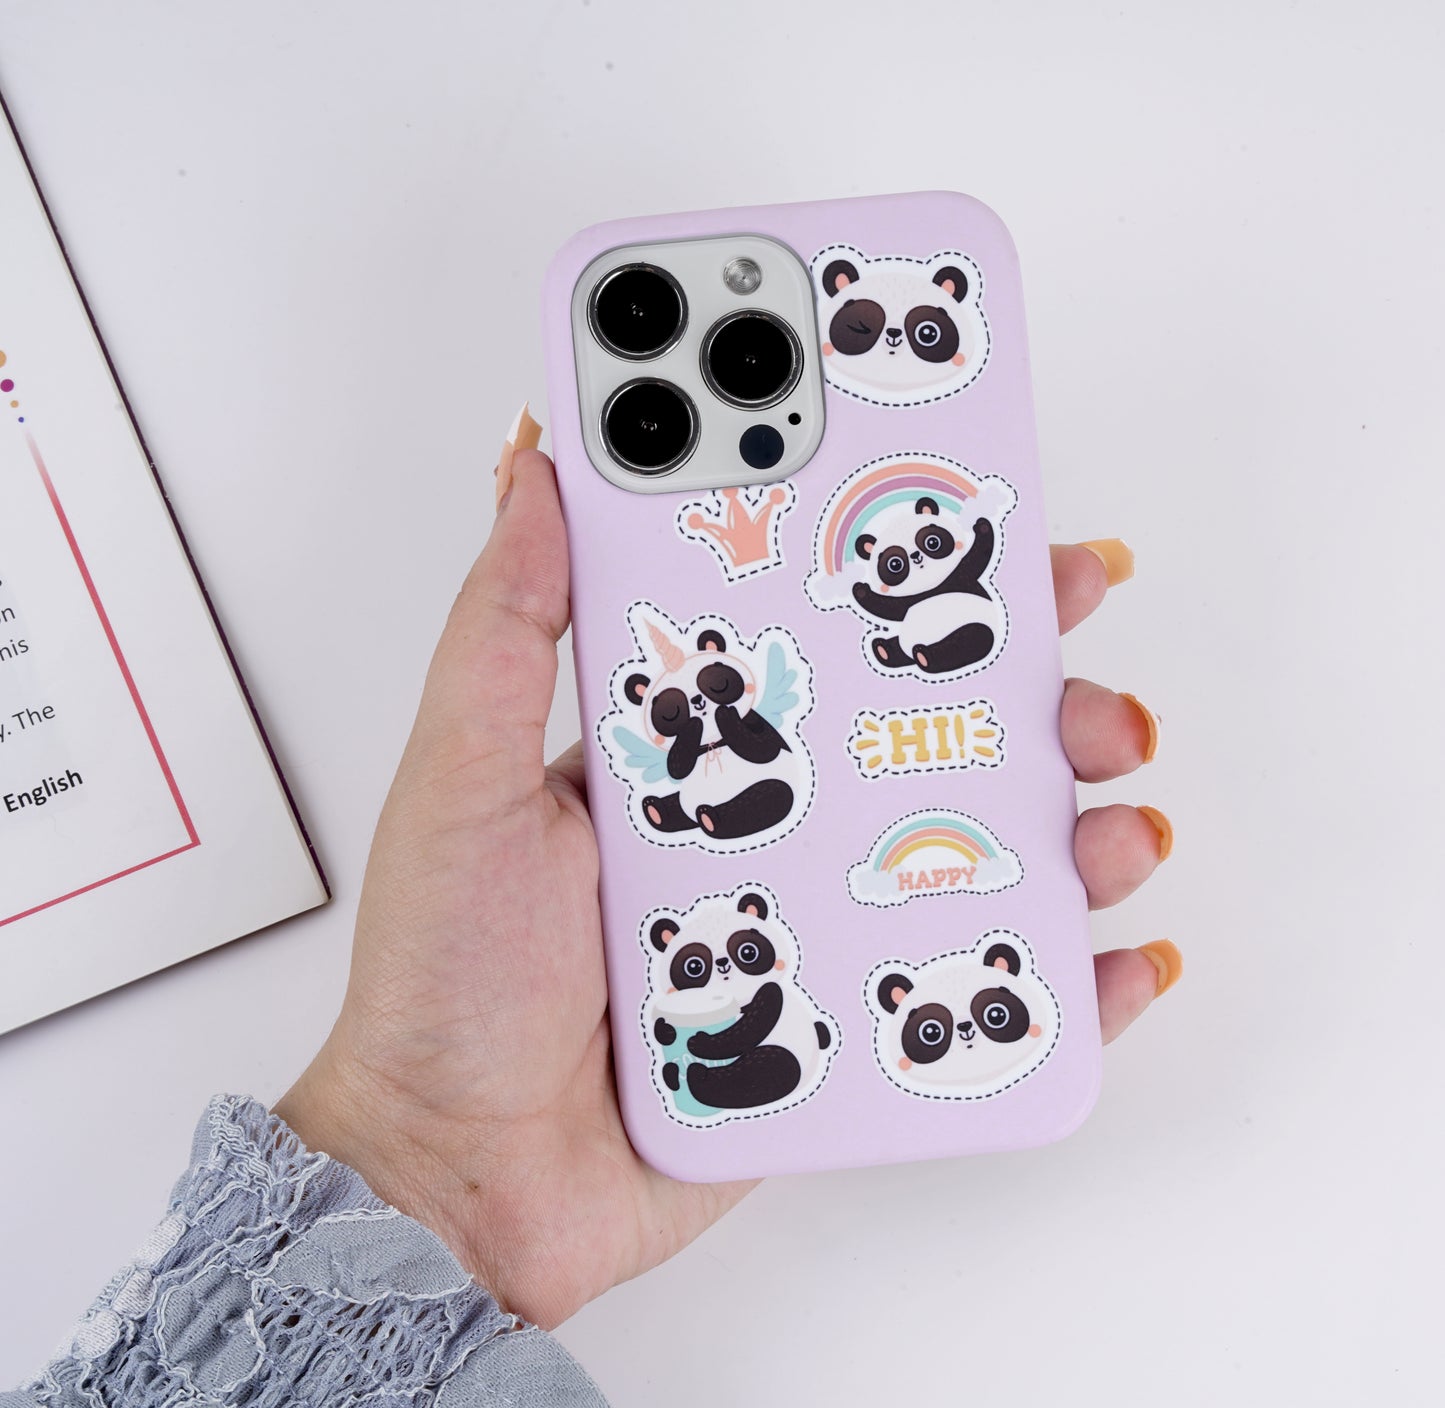 The Happy Panda Slim Case